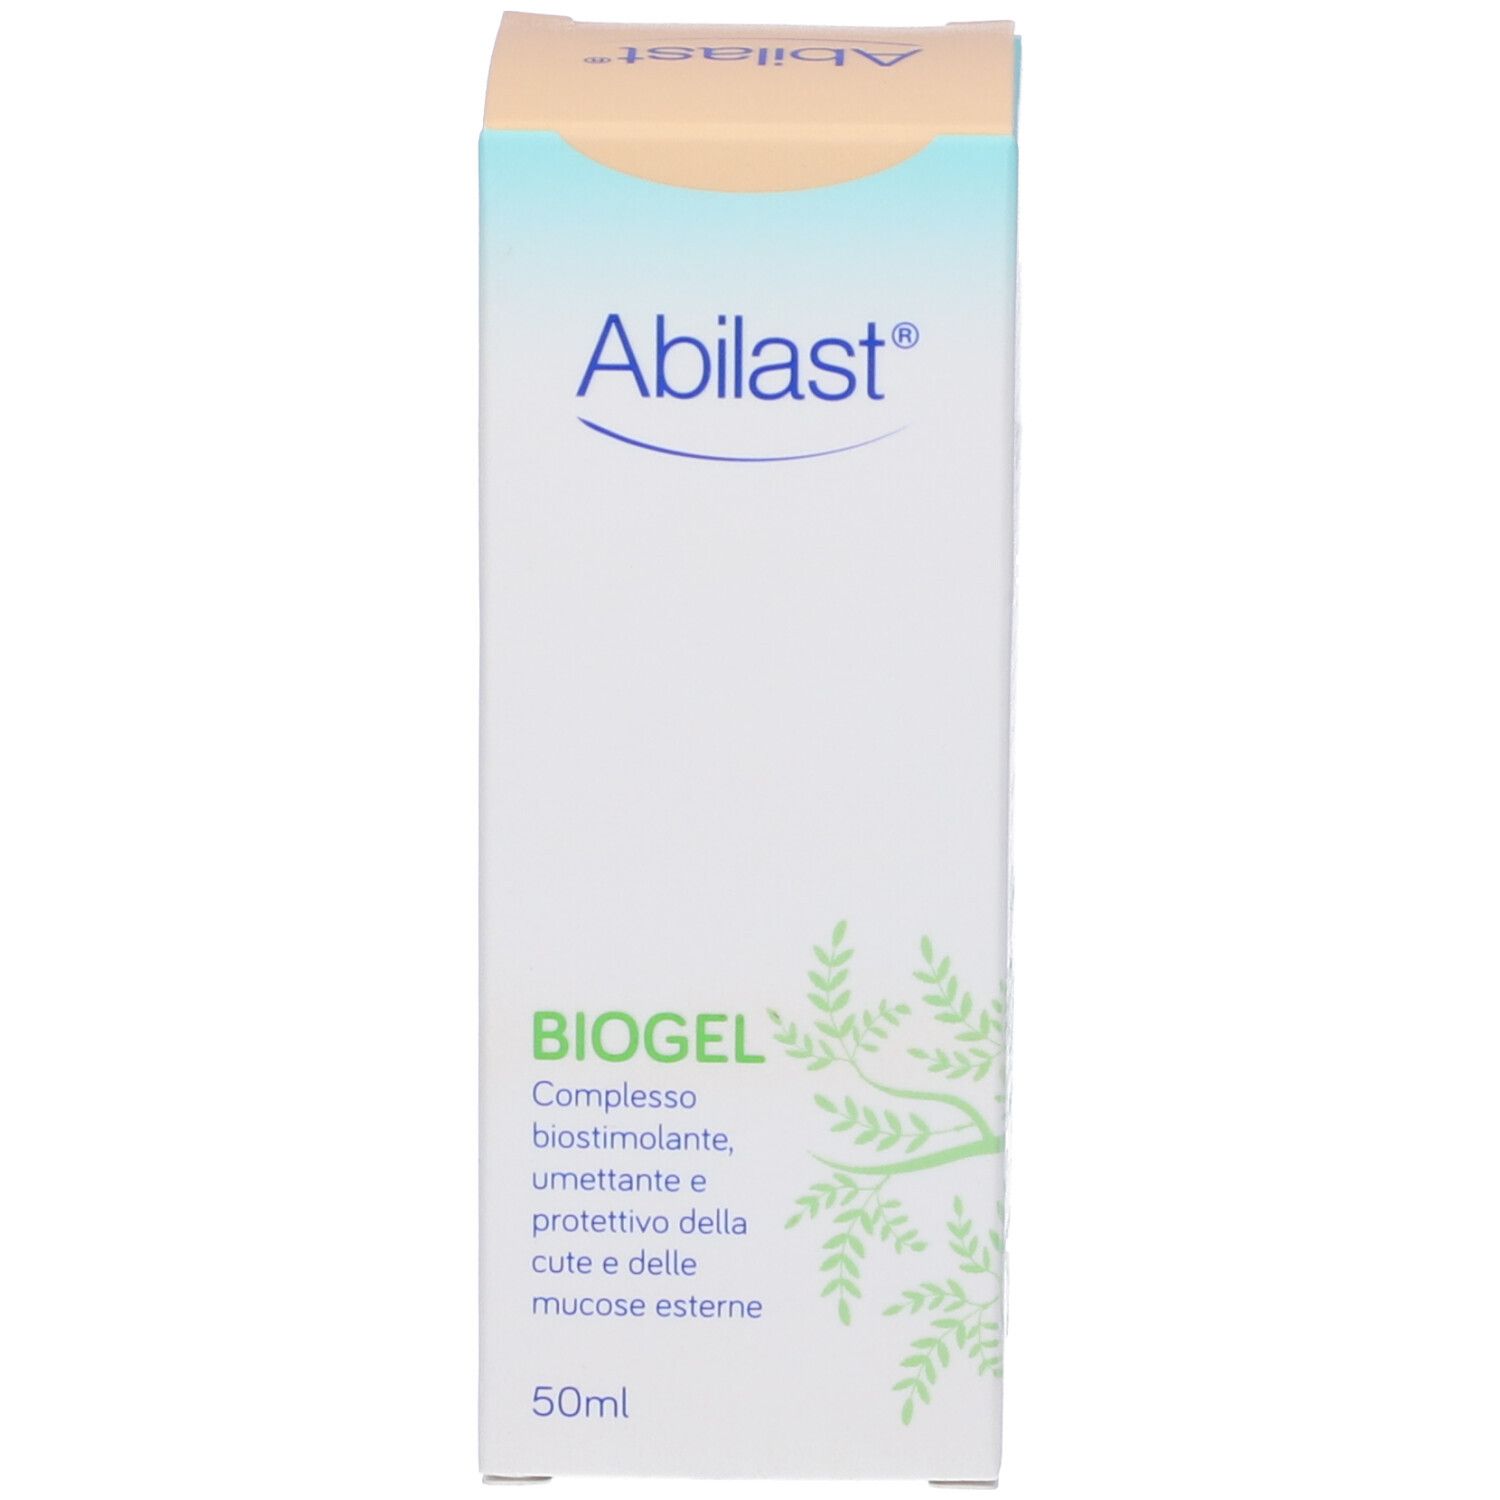 Abilast® Biogel